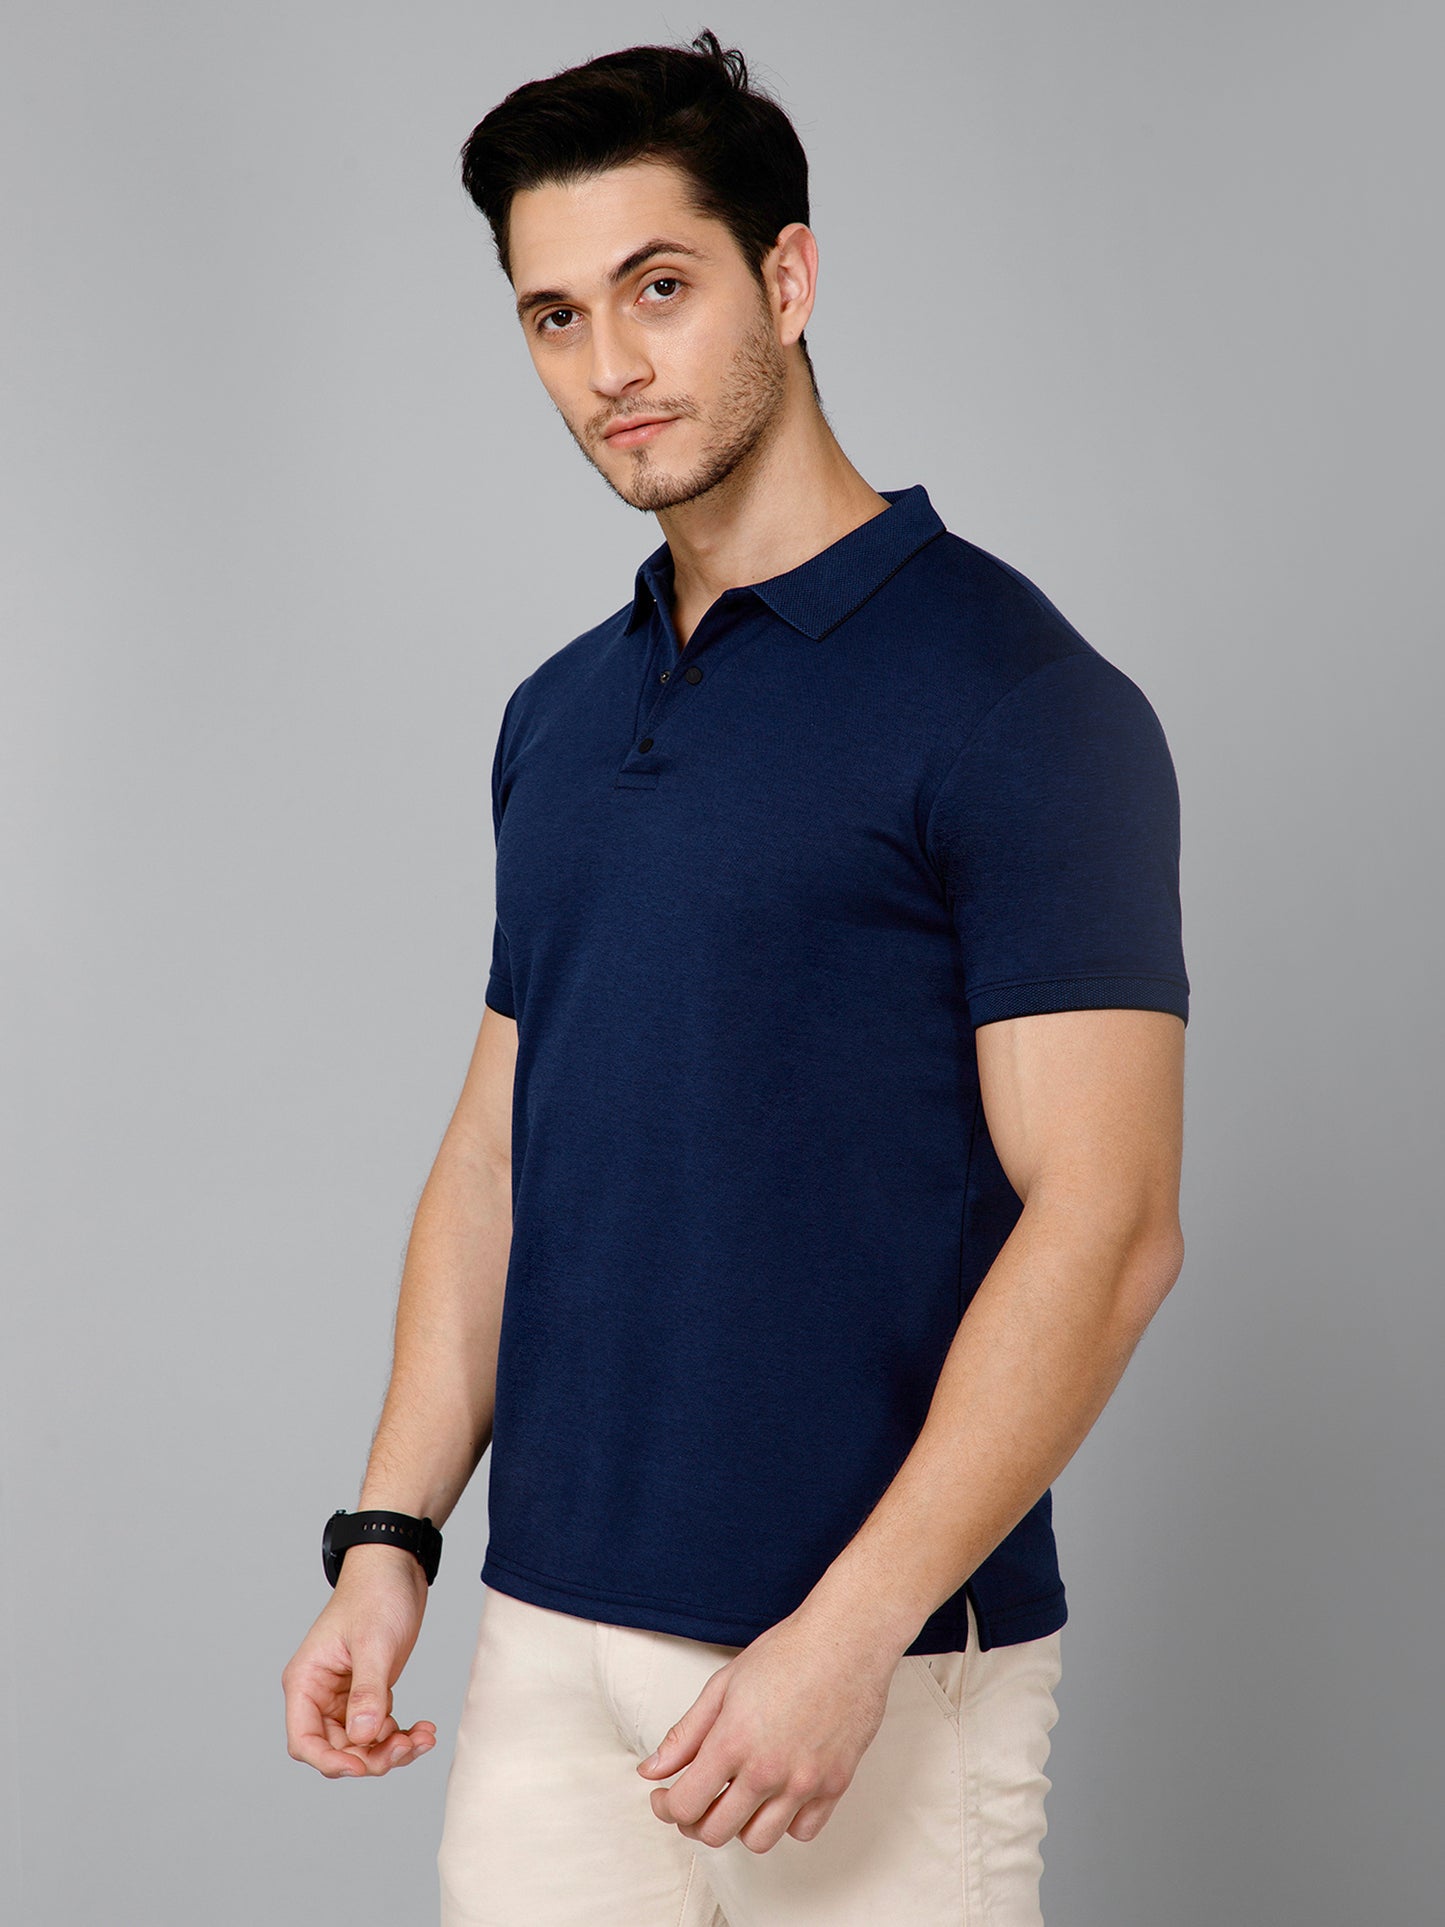 Cross Knit Navy Blue Polo T-shirt